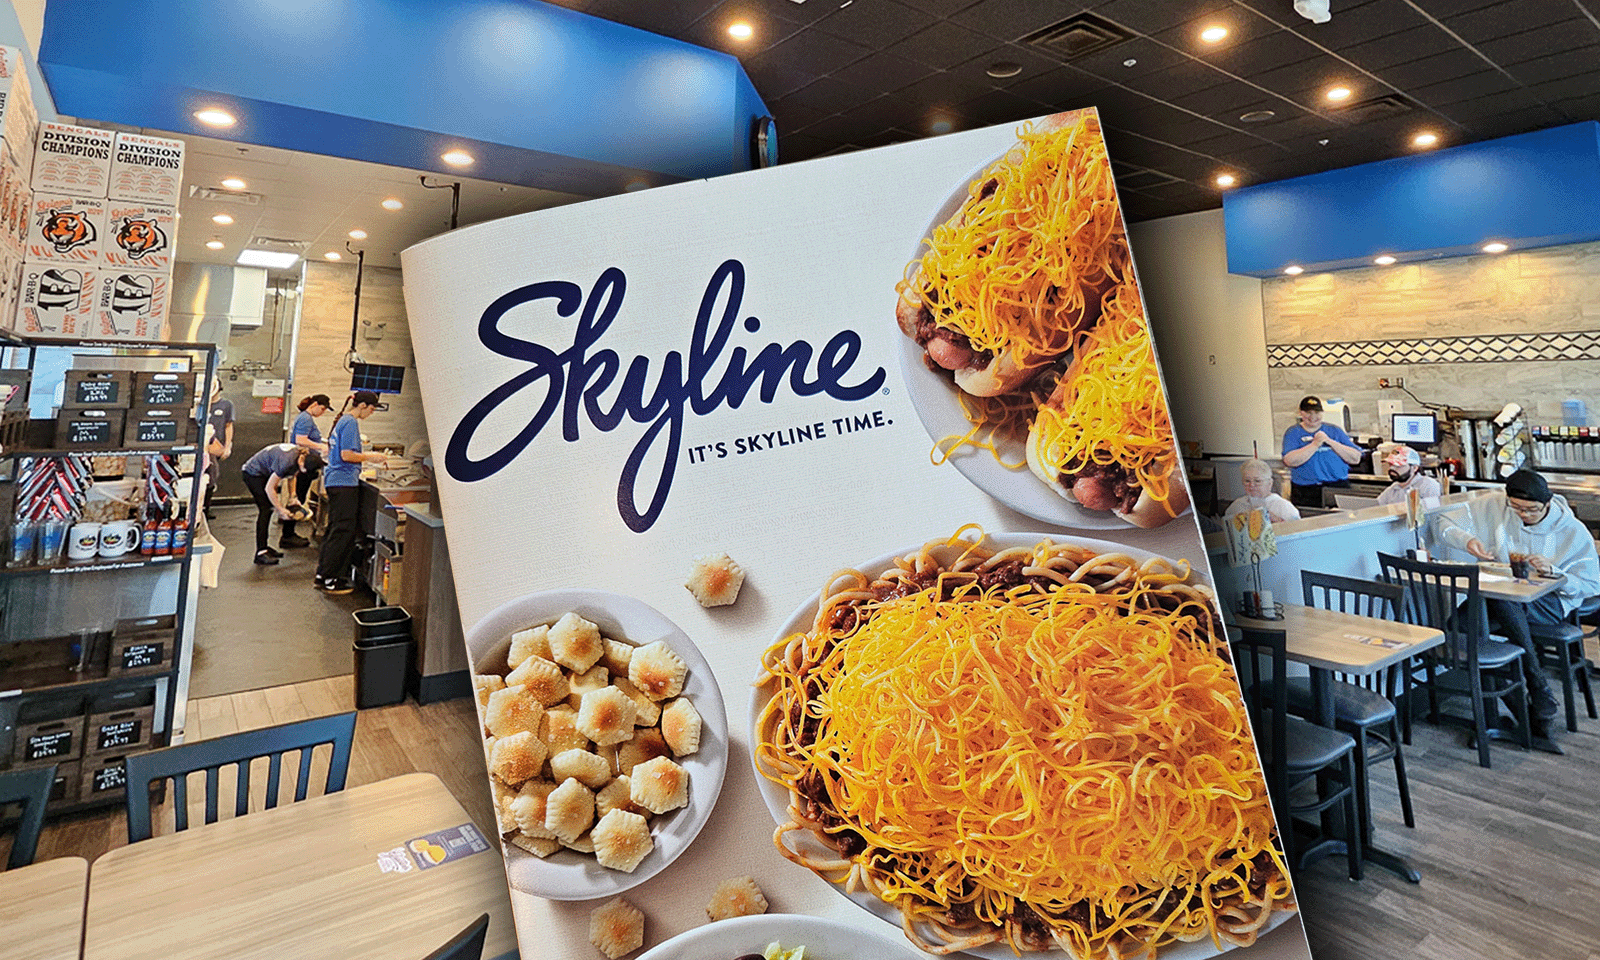 Skyline chili restaurant with menu